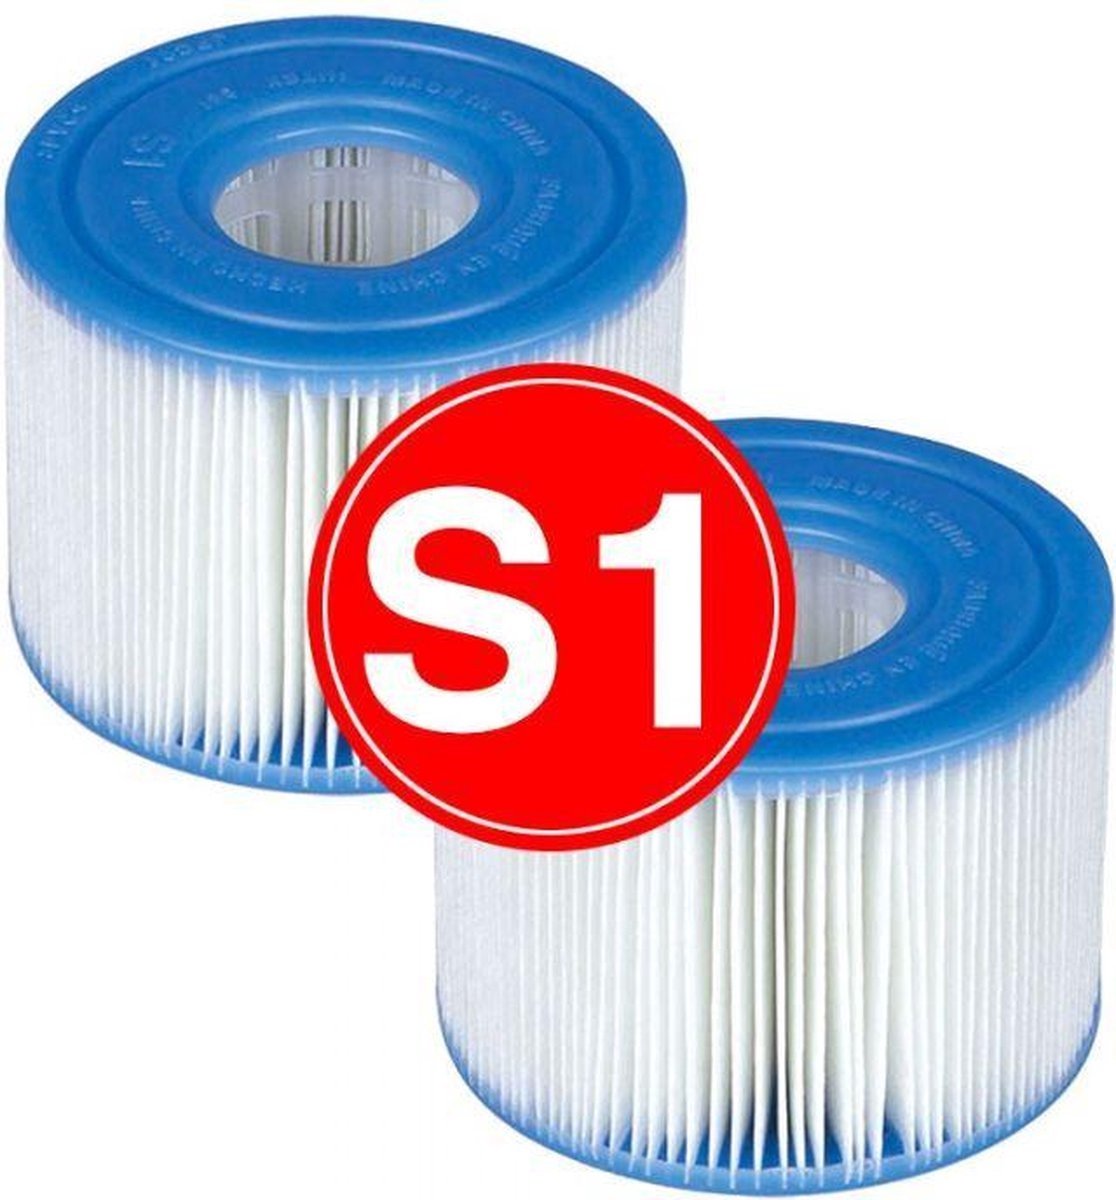 24 S-1 Intex Pure Spa Filter